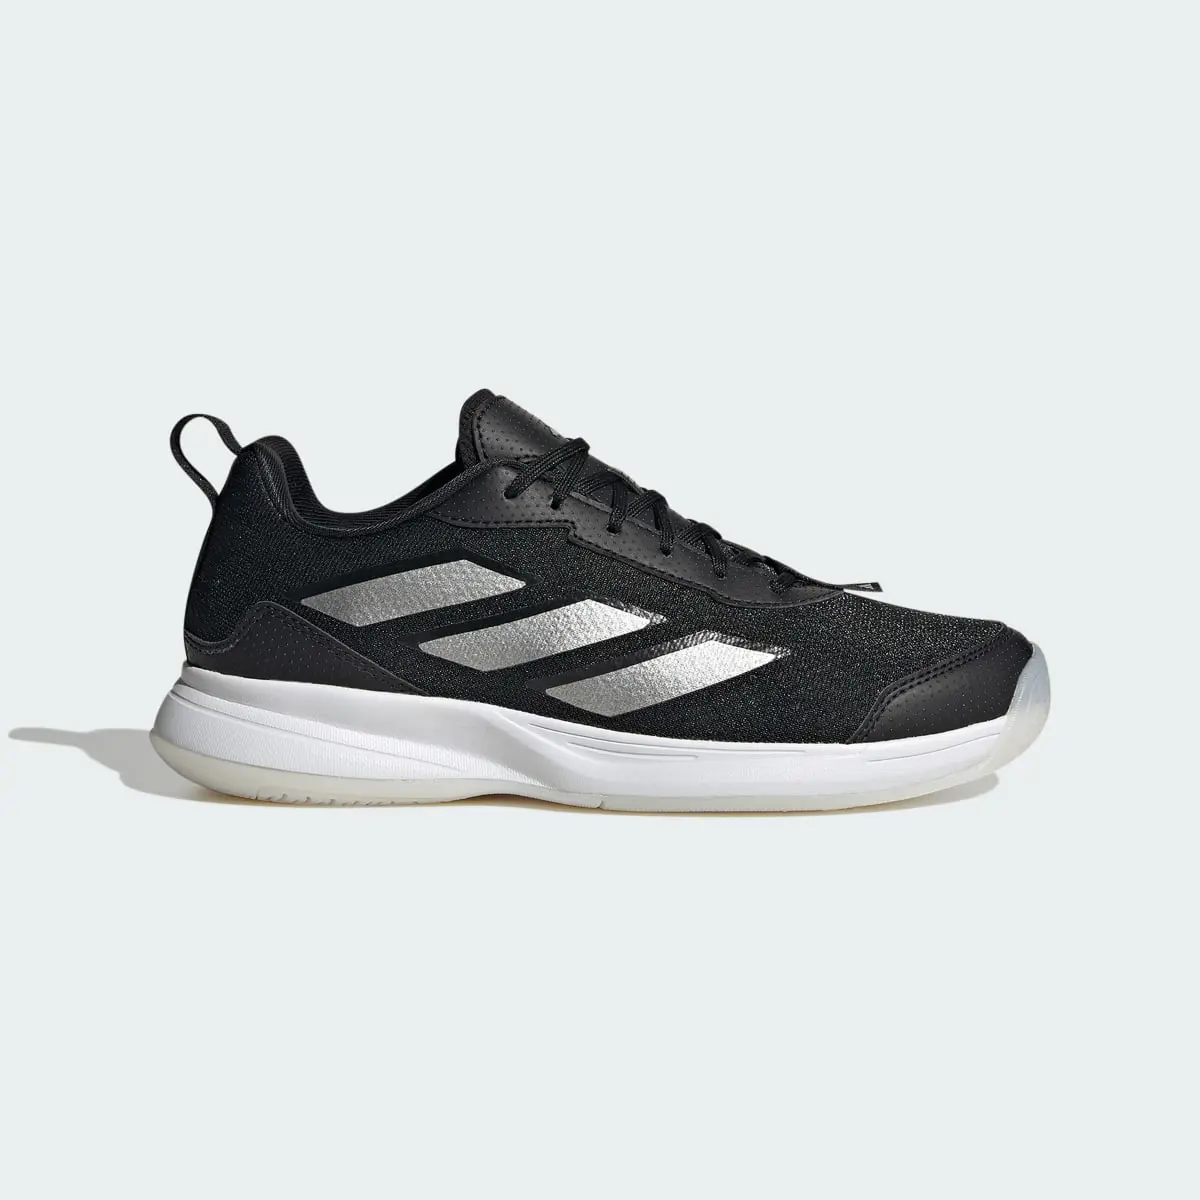 Adidas Avaflash Low Tennis Shoes. 2